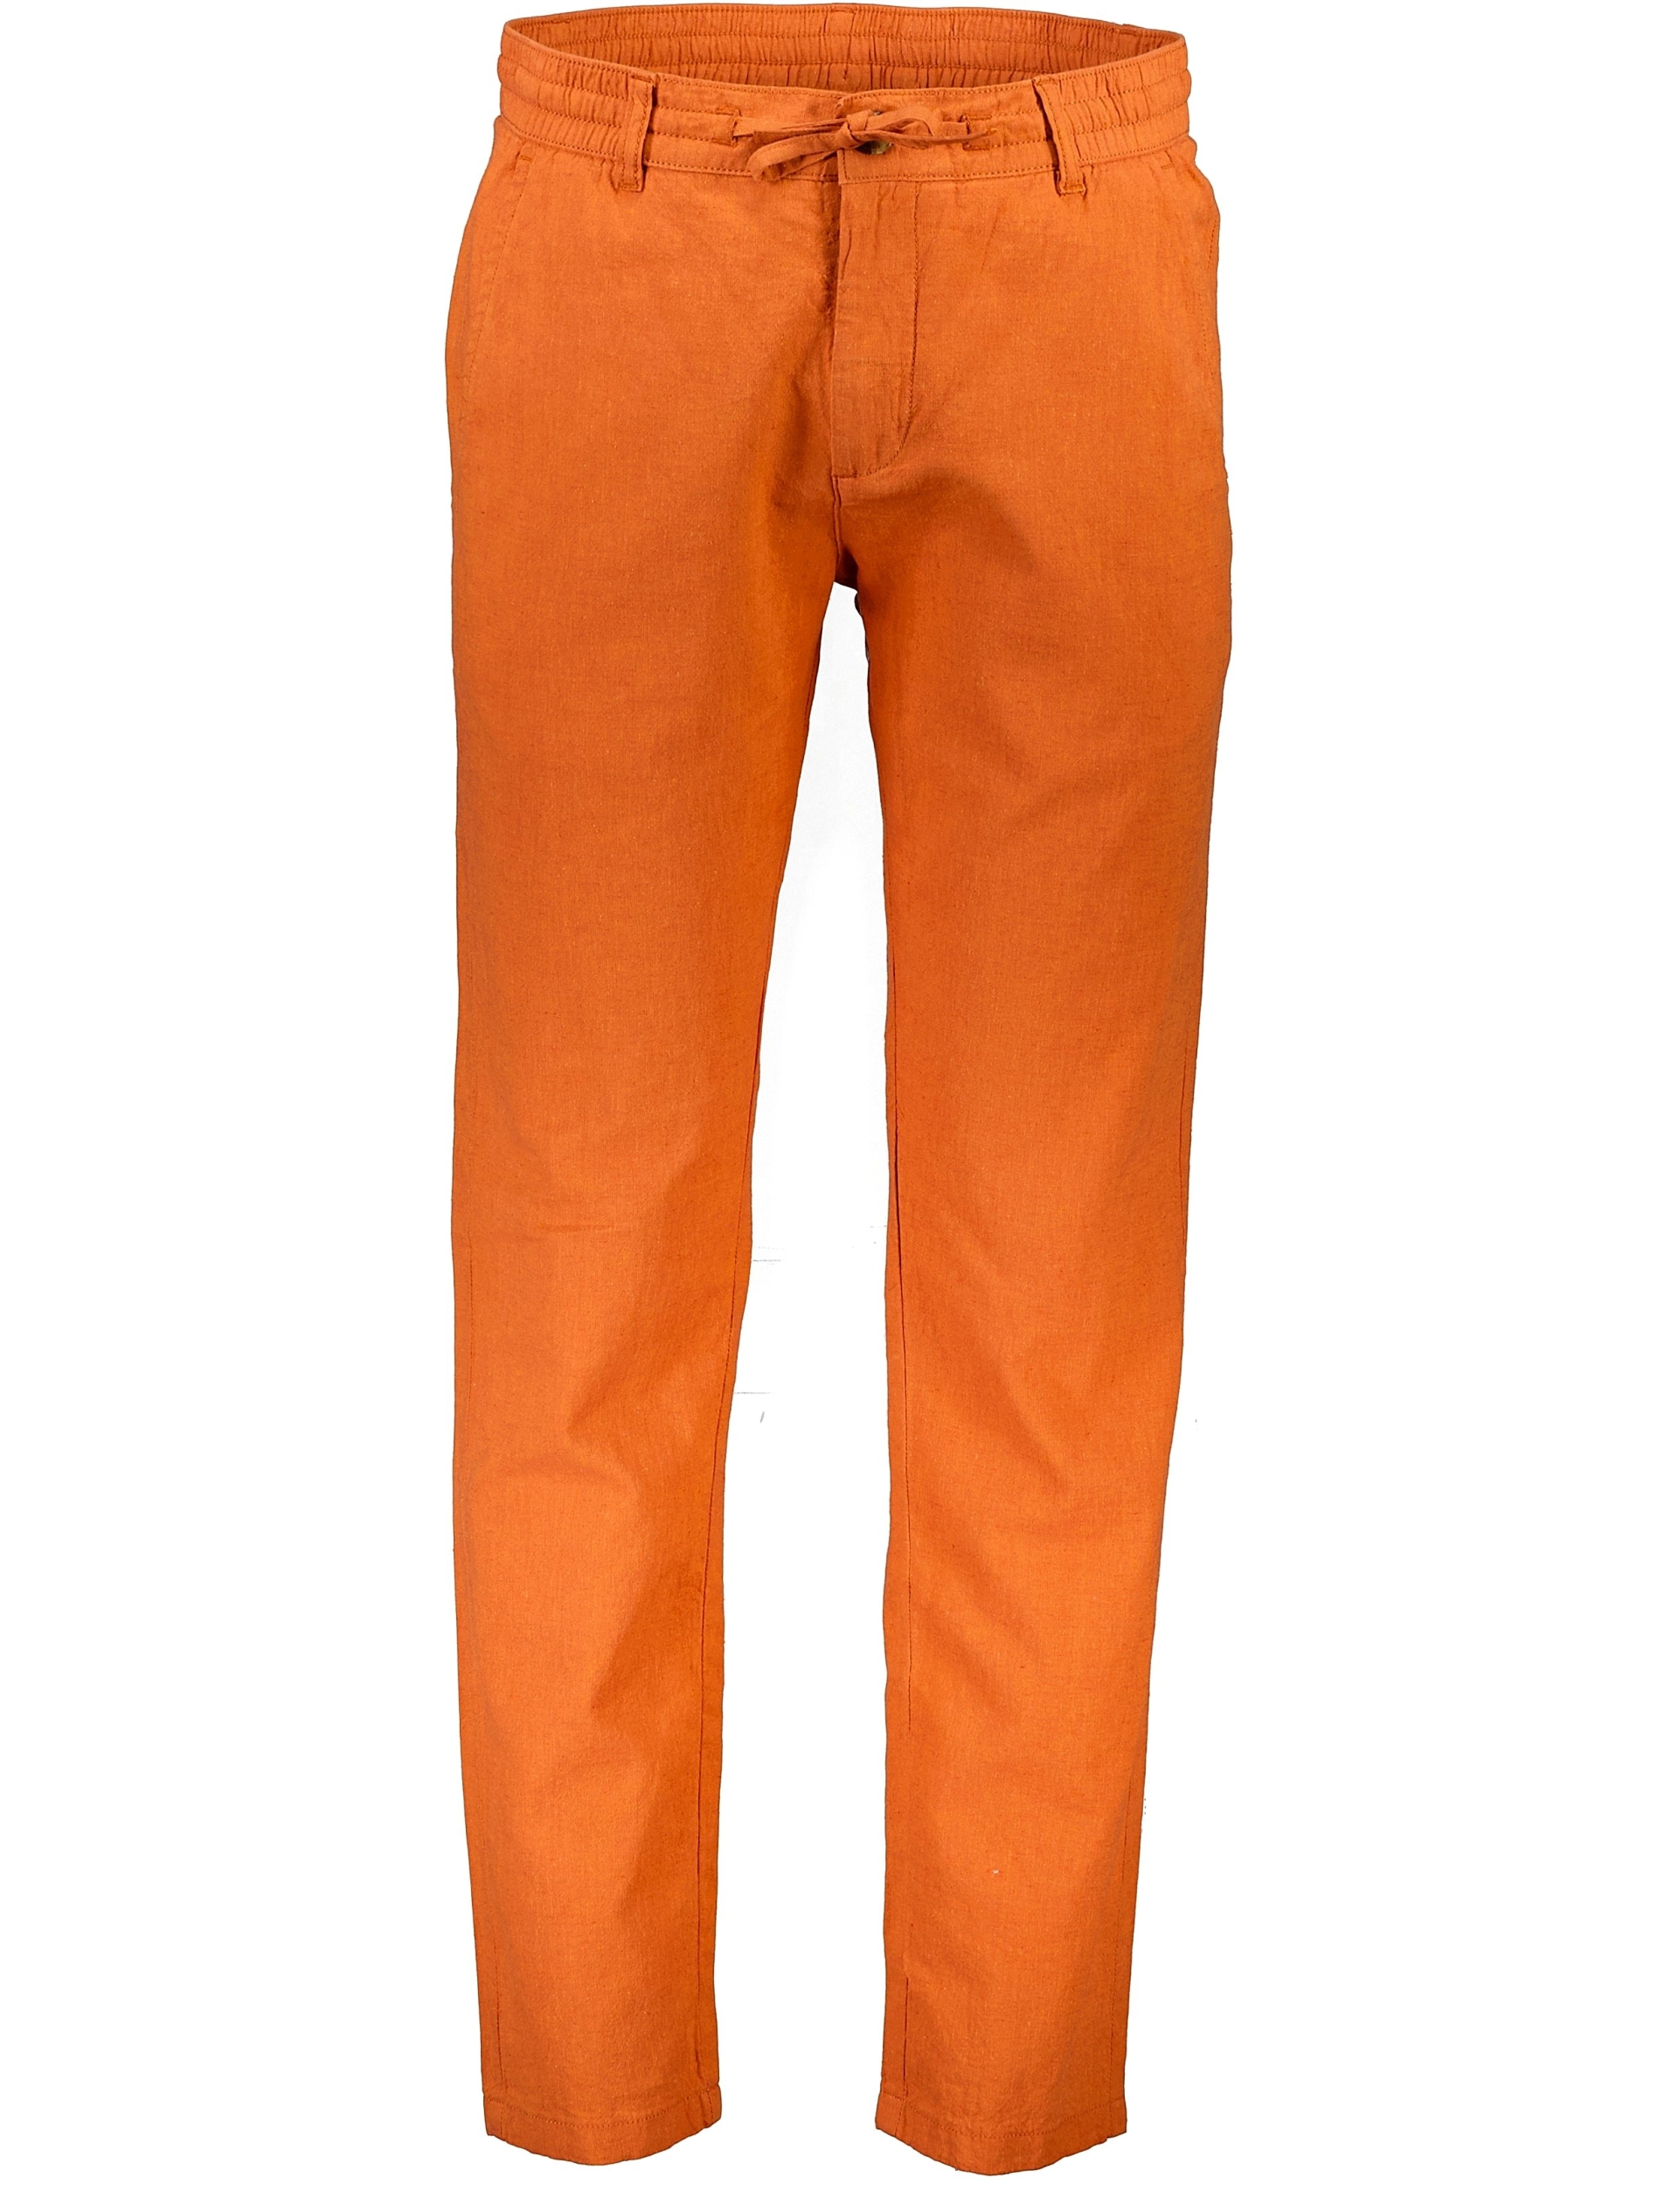 Lindbergh Linen pants orange / burnt orange